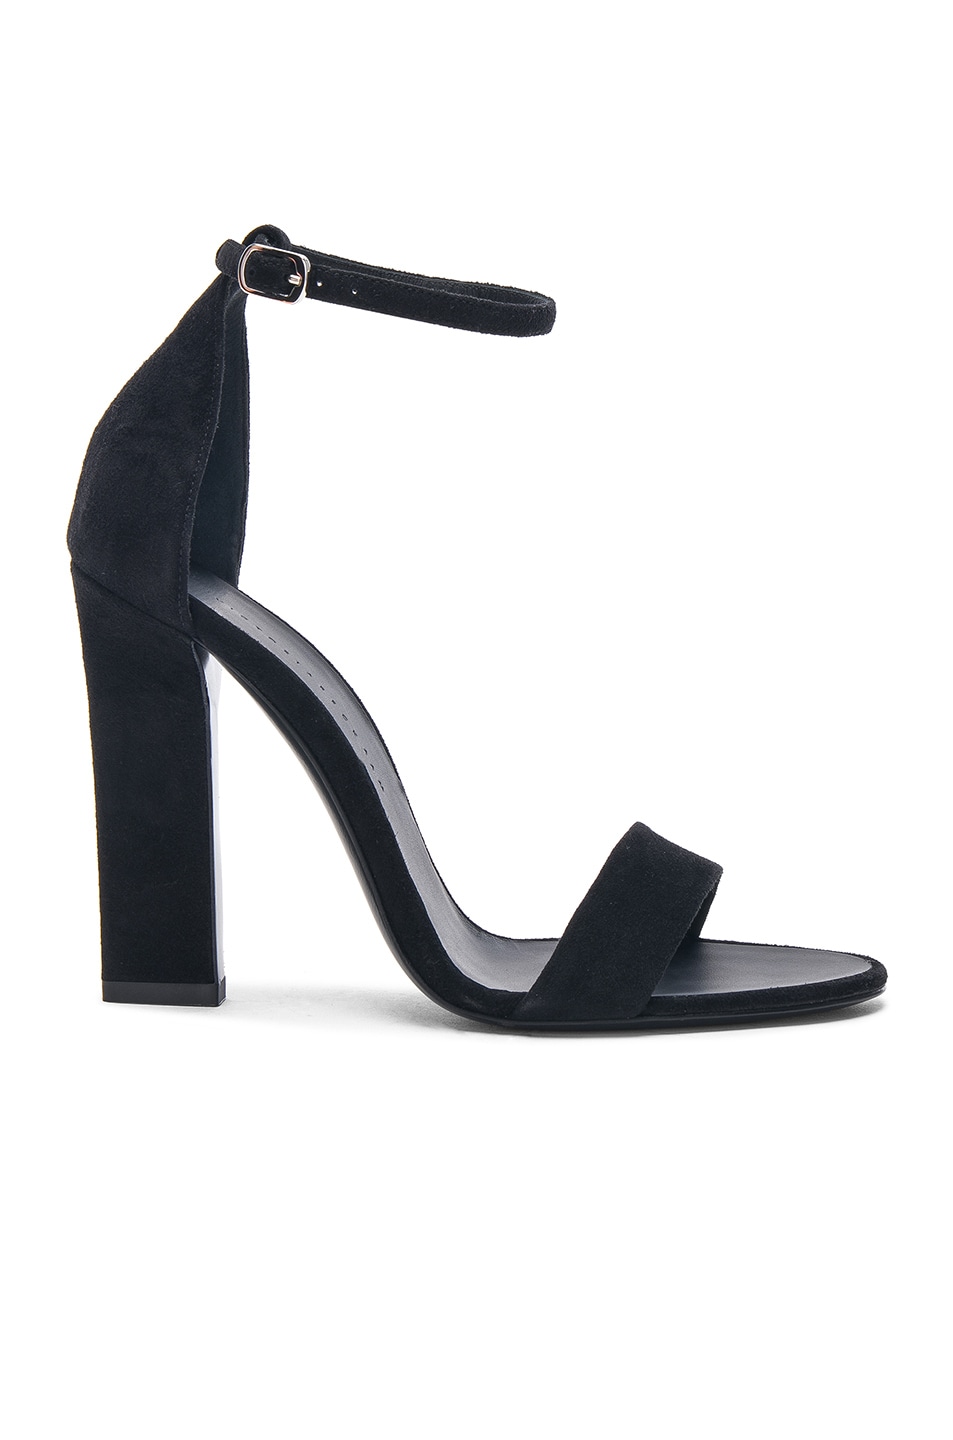 Image 1 of Victoria Beckham Suede Anna Ankle Strap Sandals in Black